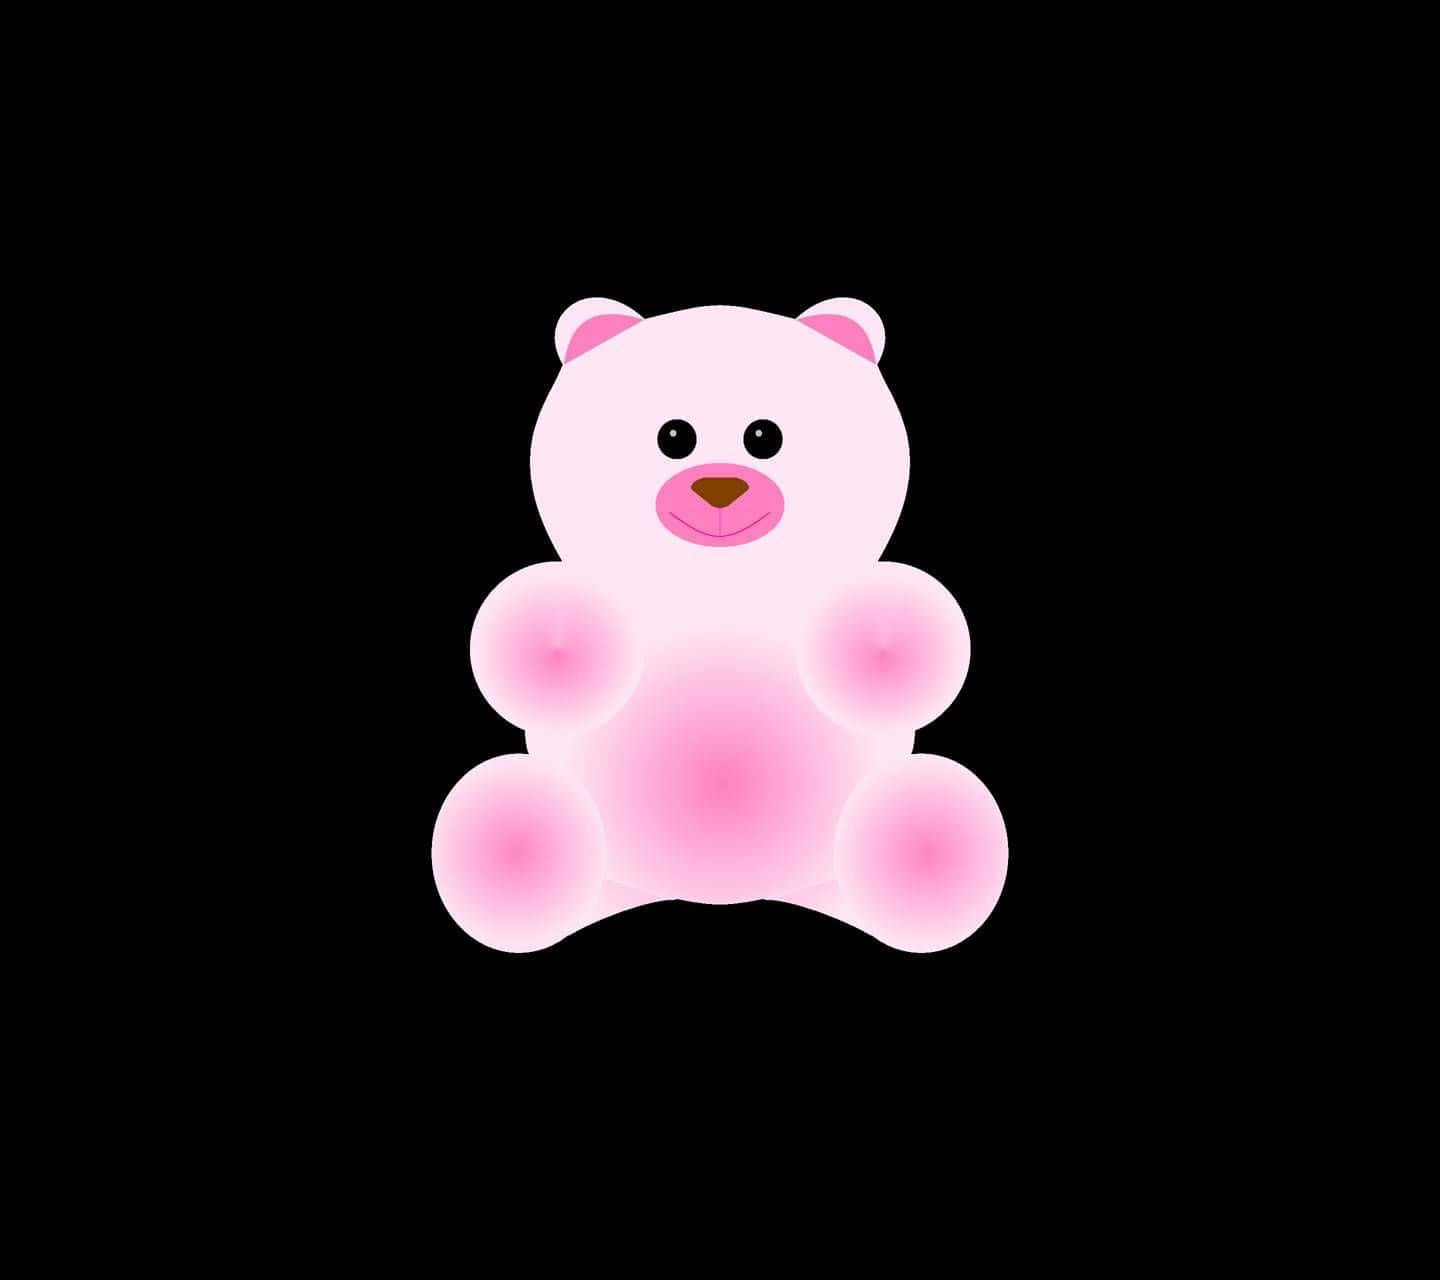 Cute Chubby Pink Teddy Bear Wallpaper